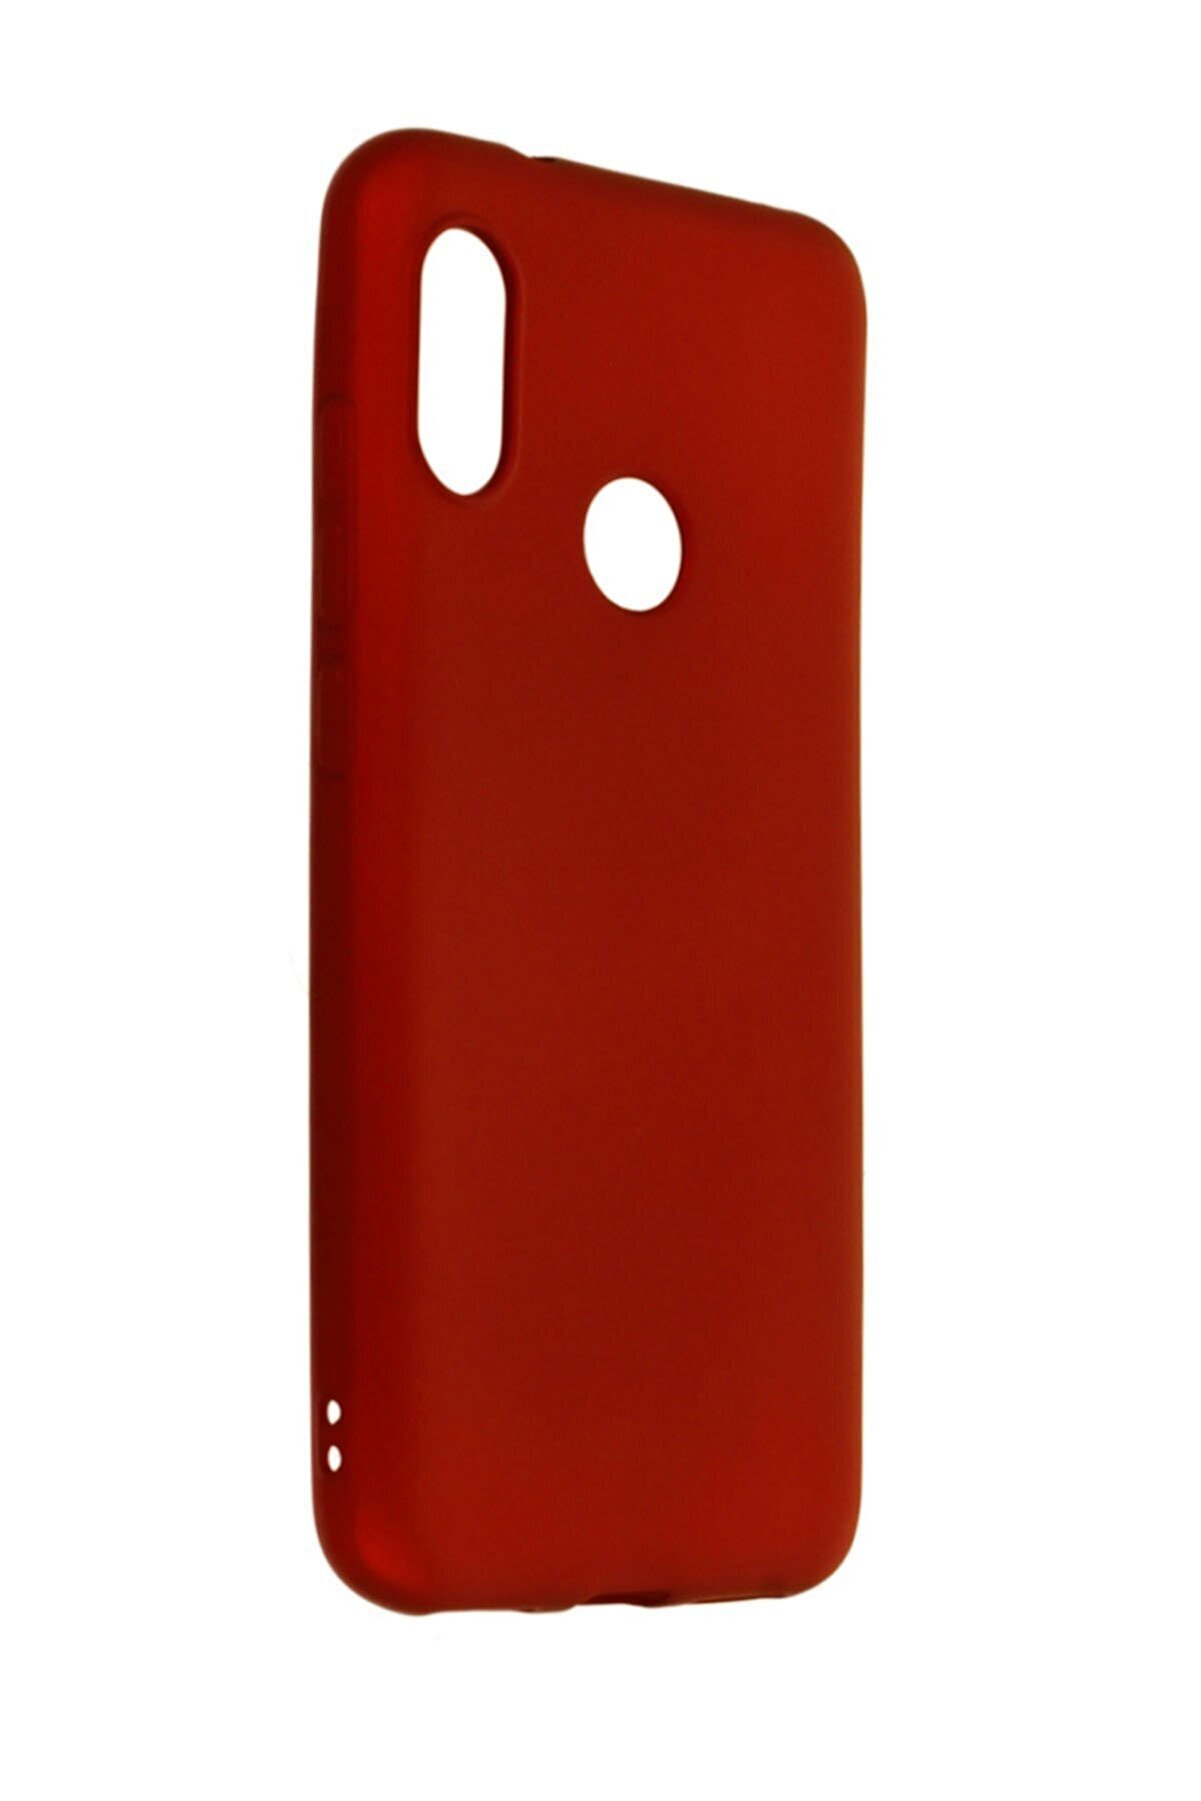 NewFace Xiaomi Mi A2 Lite Kılıf Premium Yumuşak Soft Silikon Kılıf - Bordo